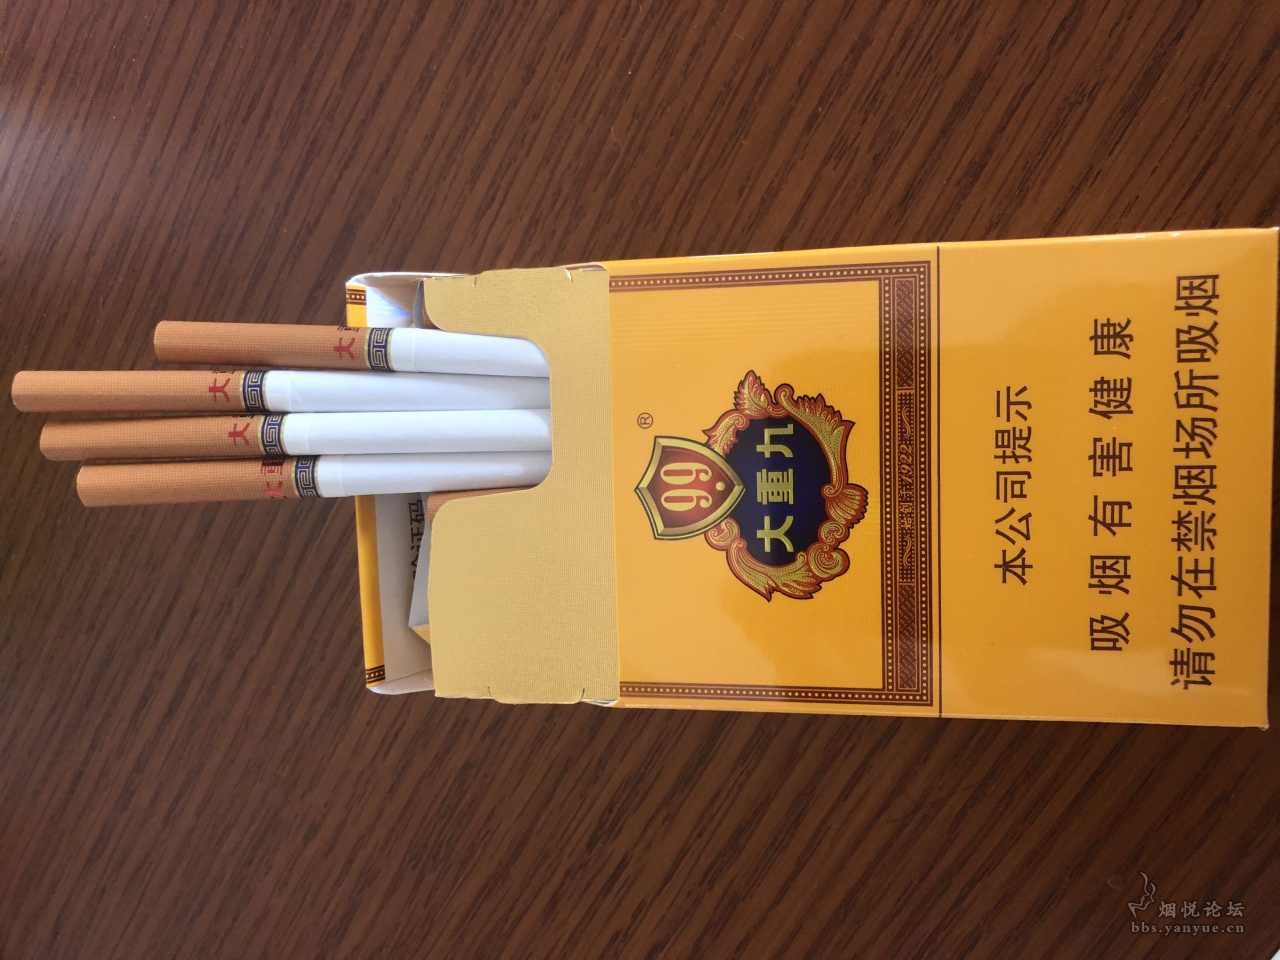 Tiffany蓝-软荷花 - 大陆产香烟 - 烟悦网论坛